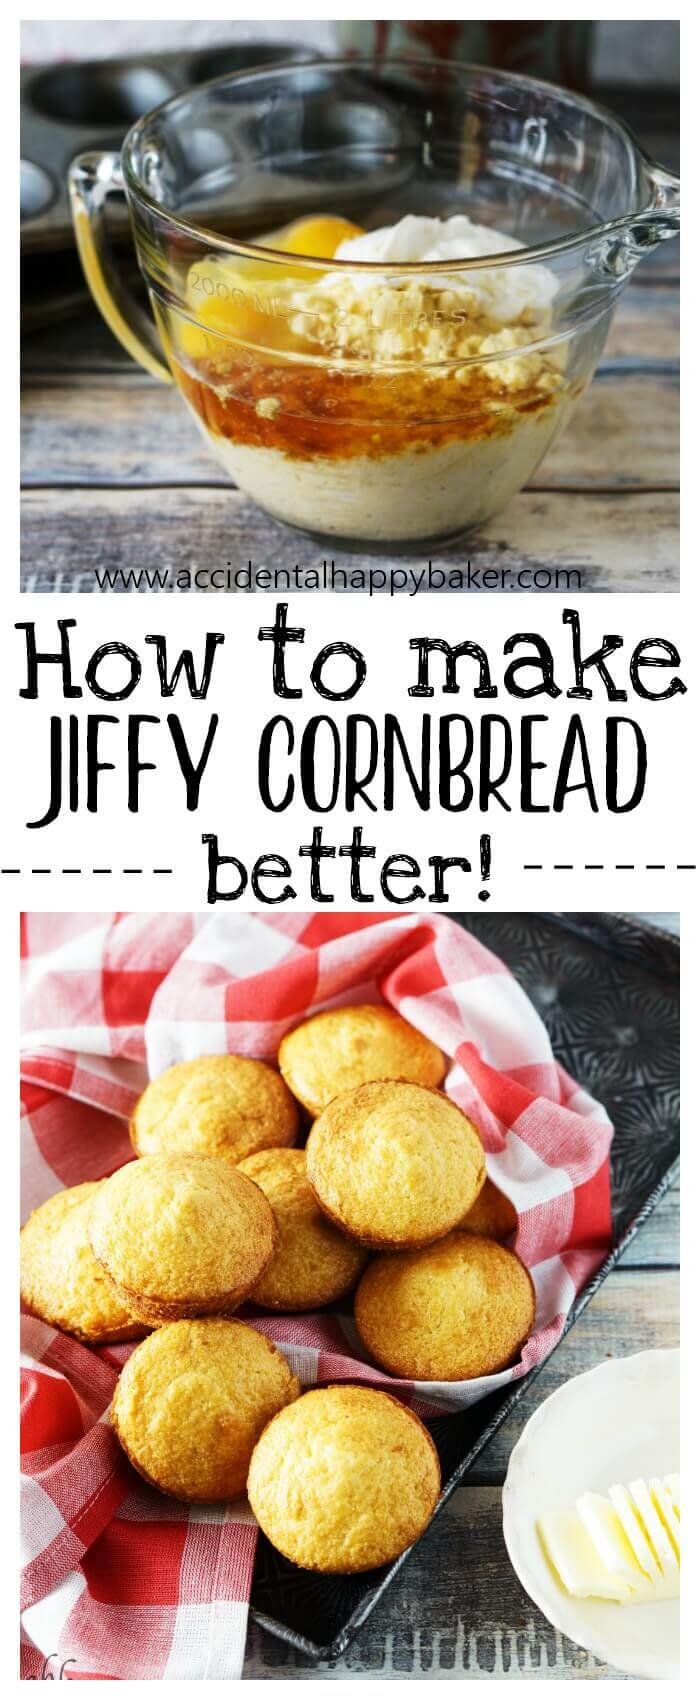 How to make Jiffy cornbread better!